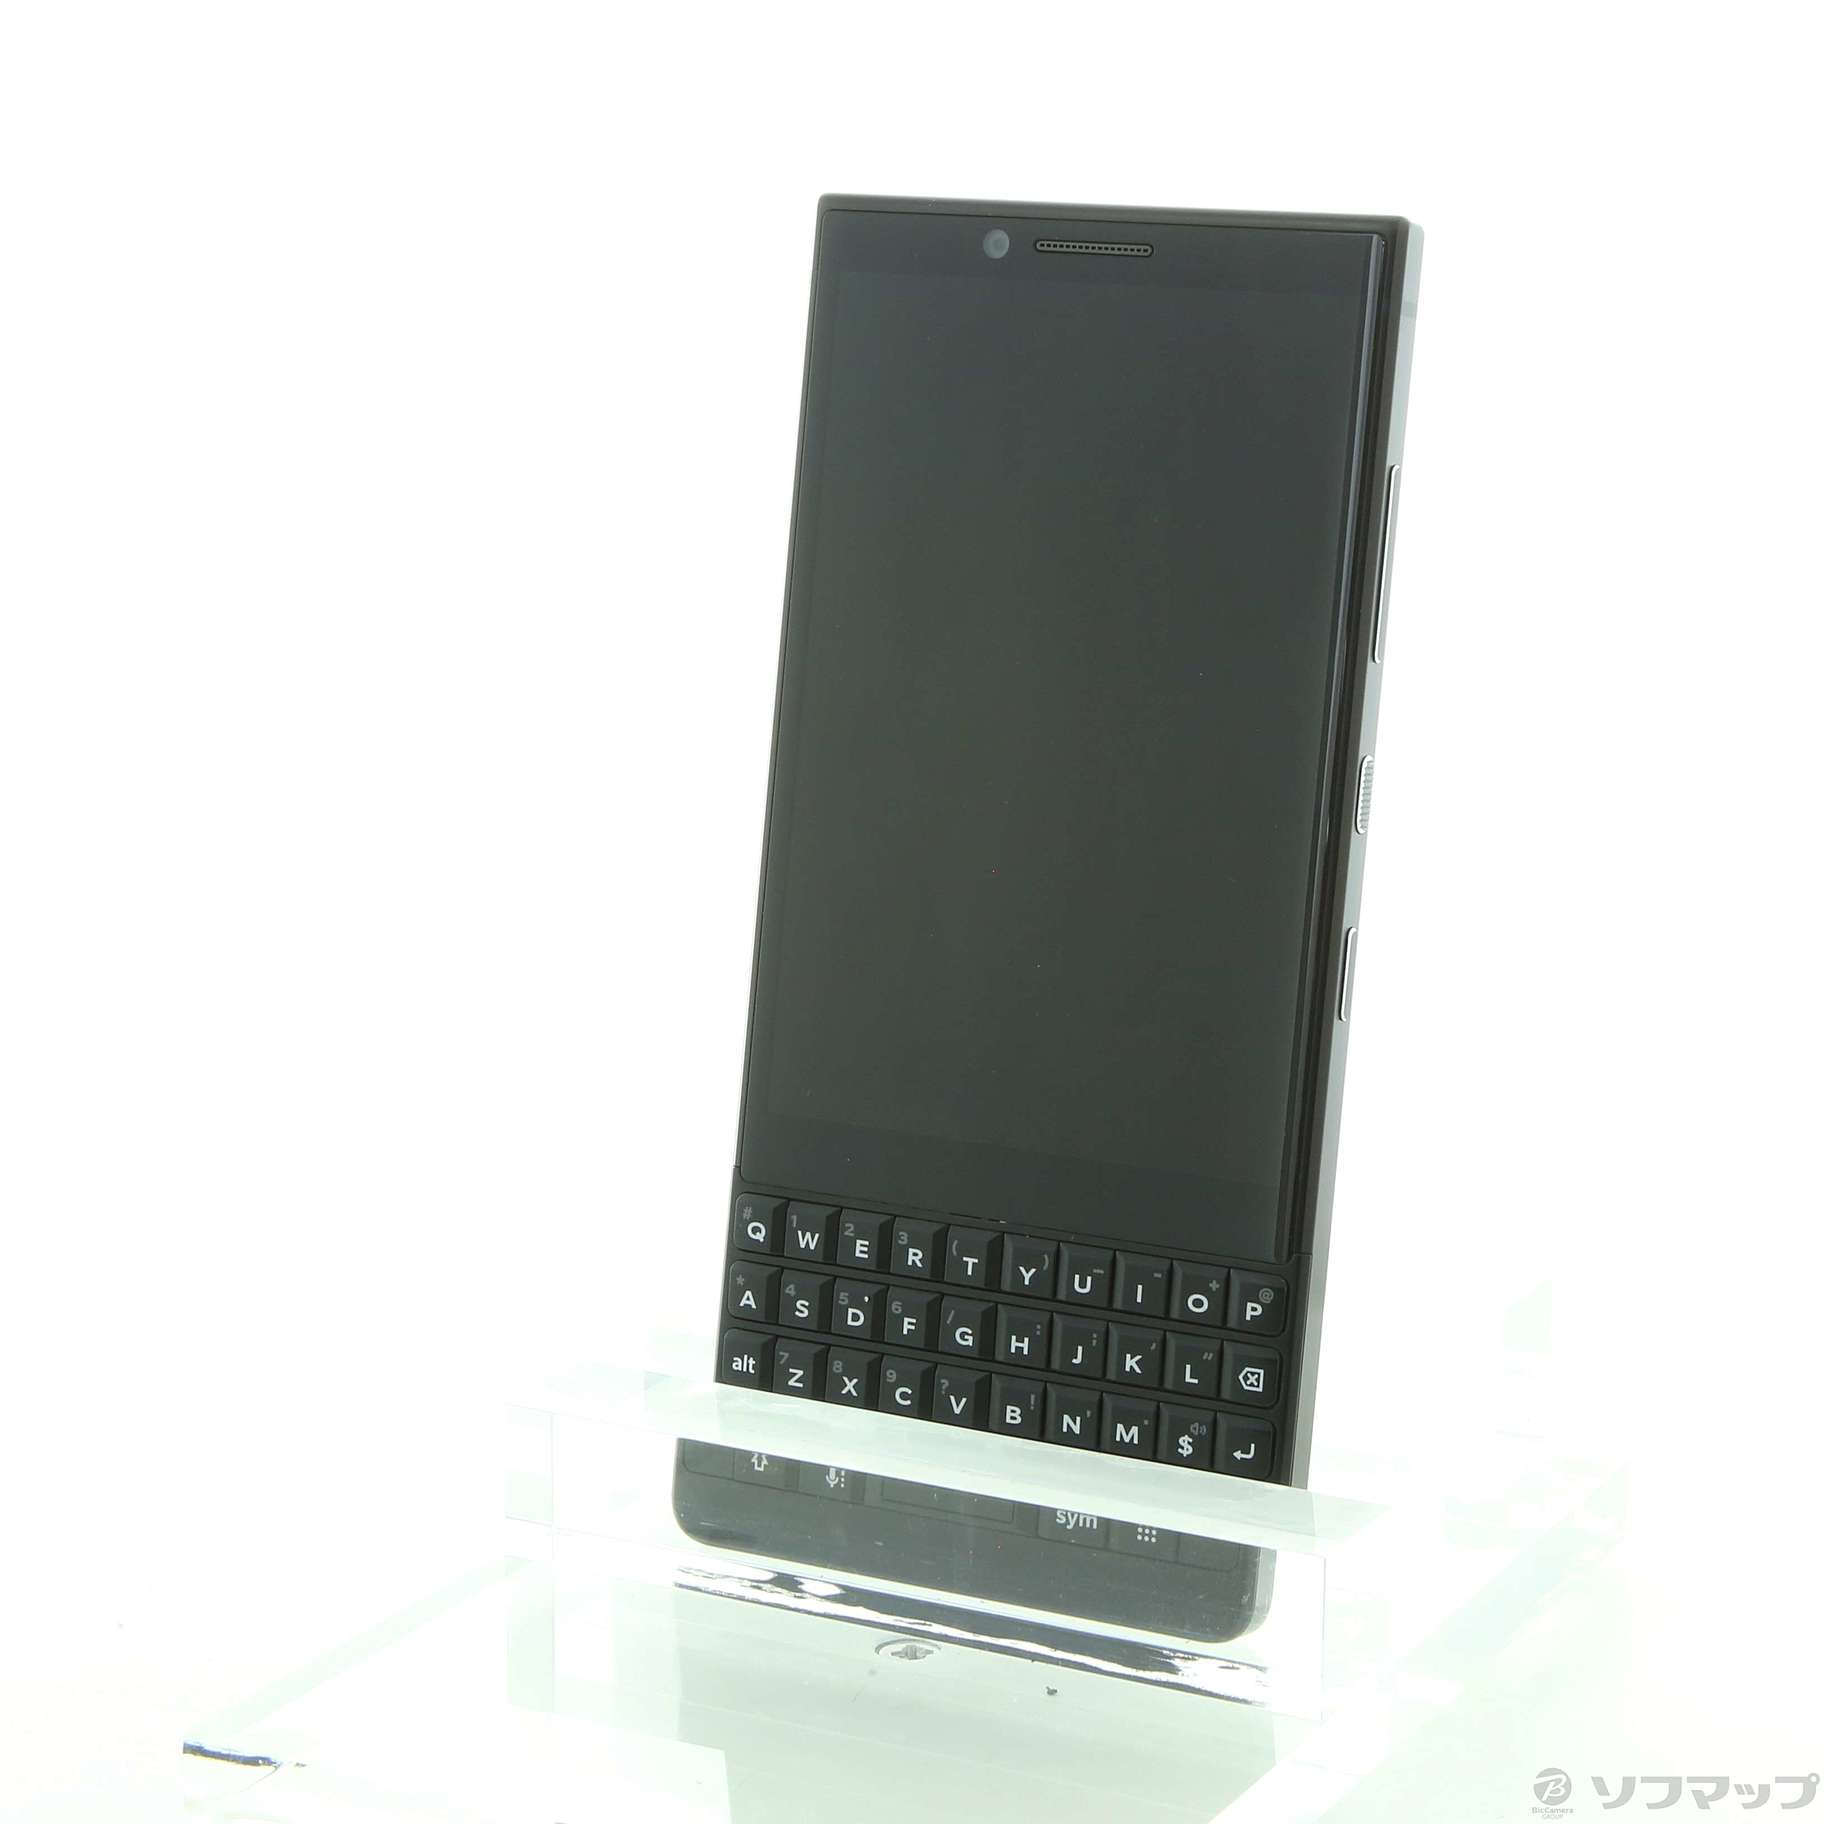 BlackBerry KEY2 ブラック　128GB SIMフリーSIM種類nano-SIM